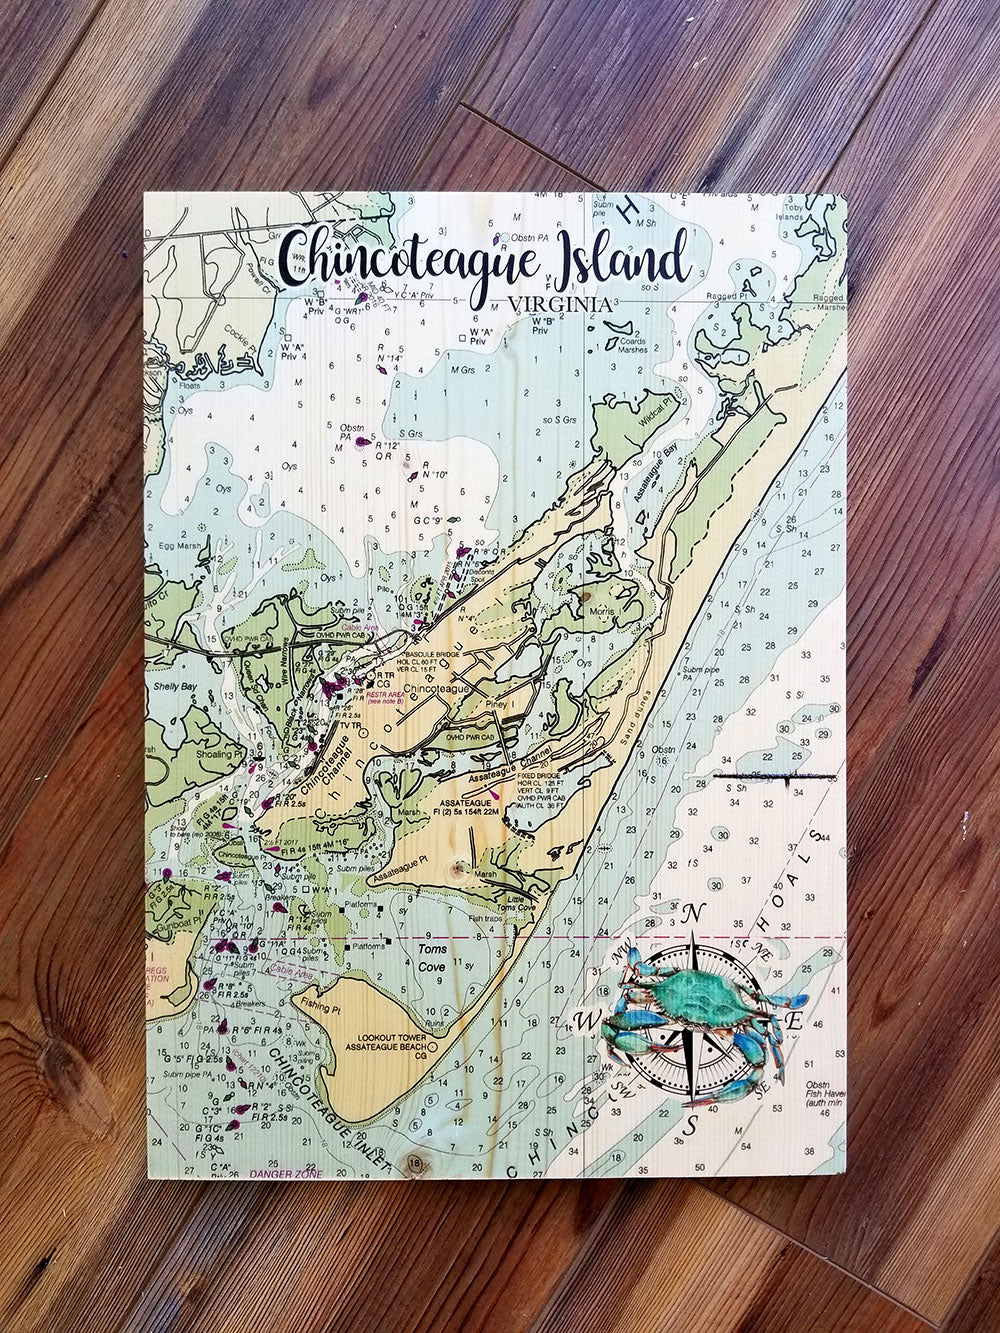 Chincoteague Island, VA Plank Map